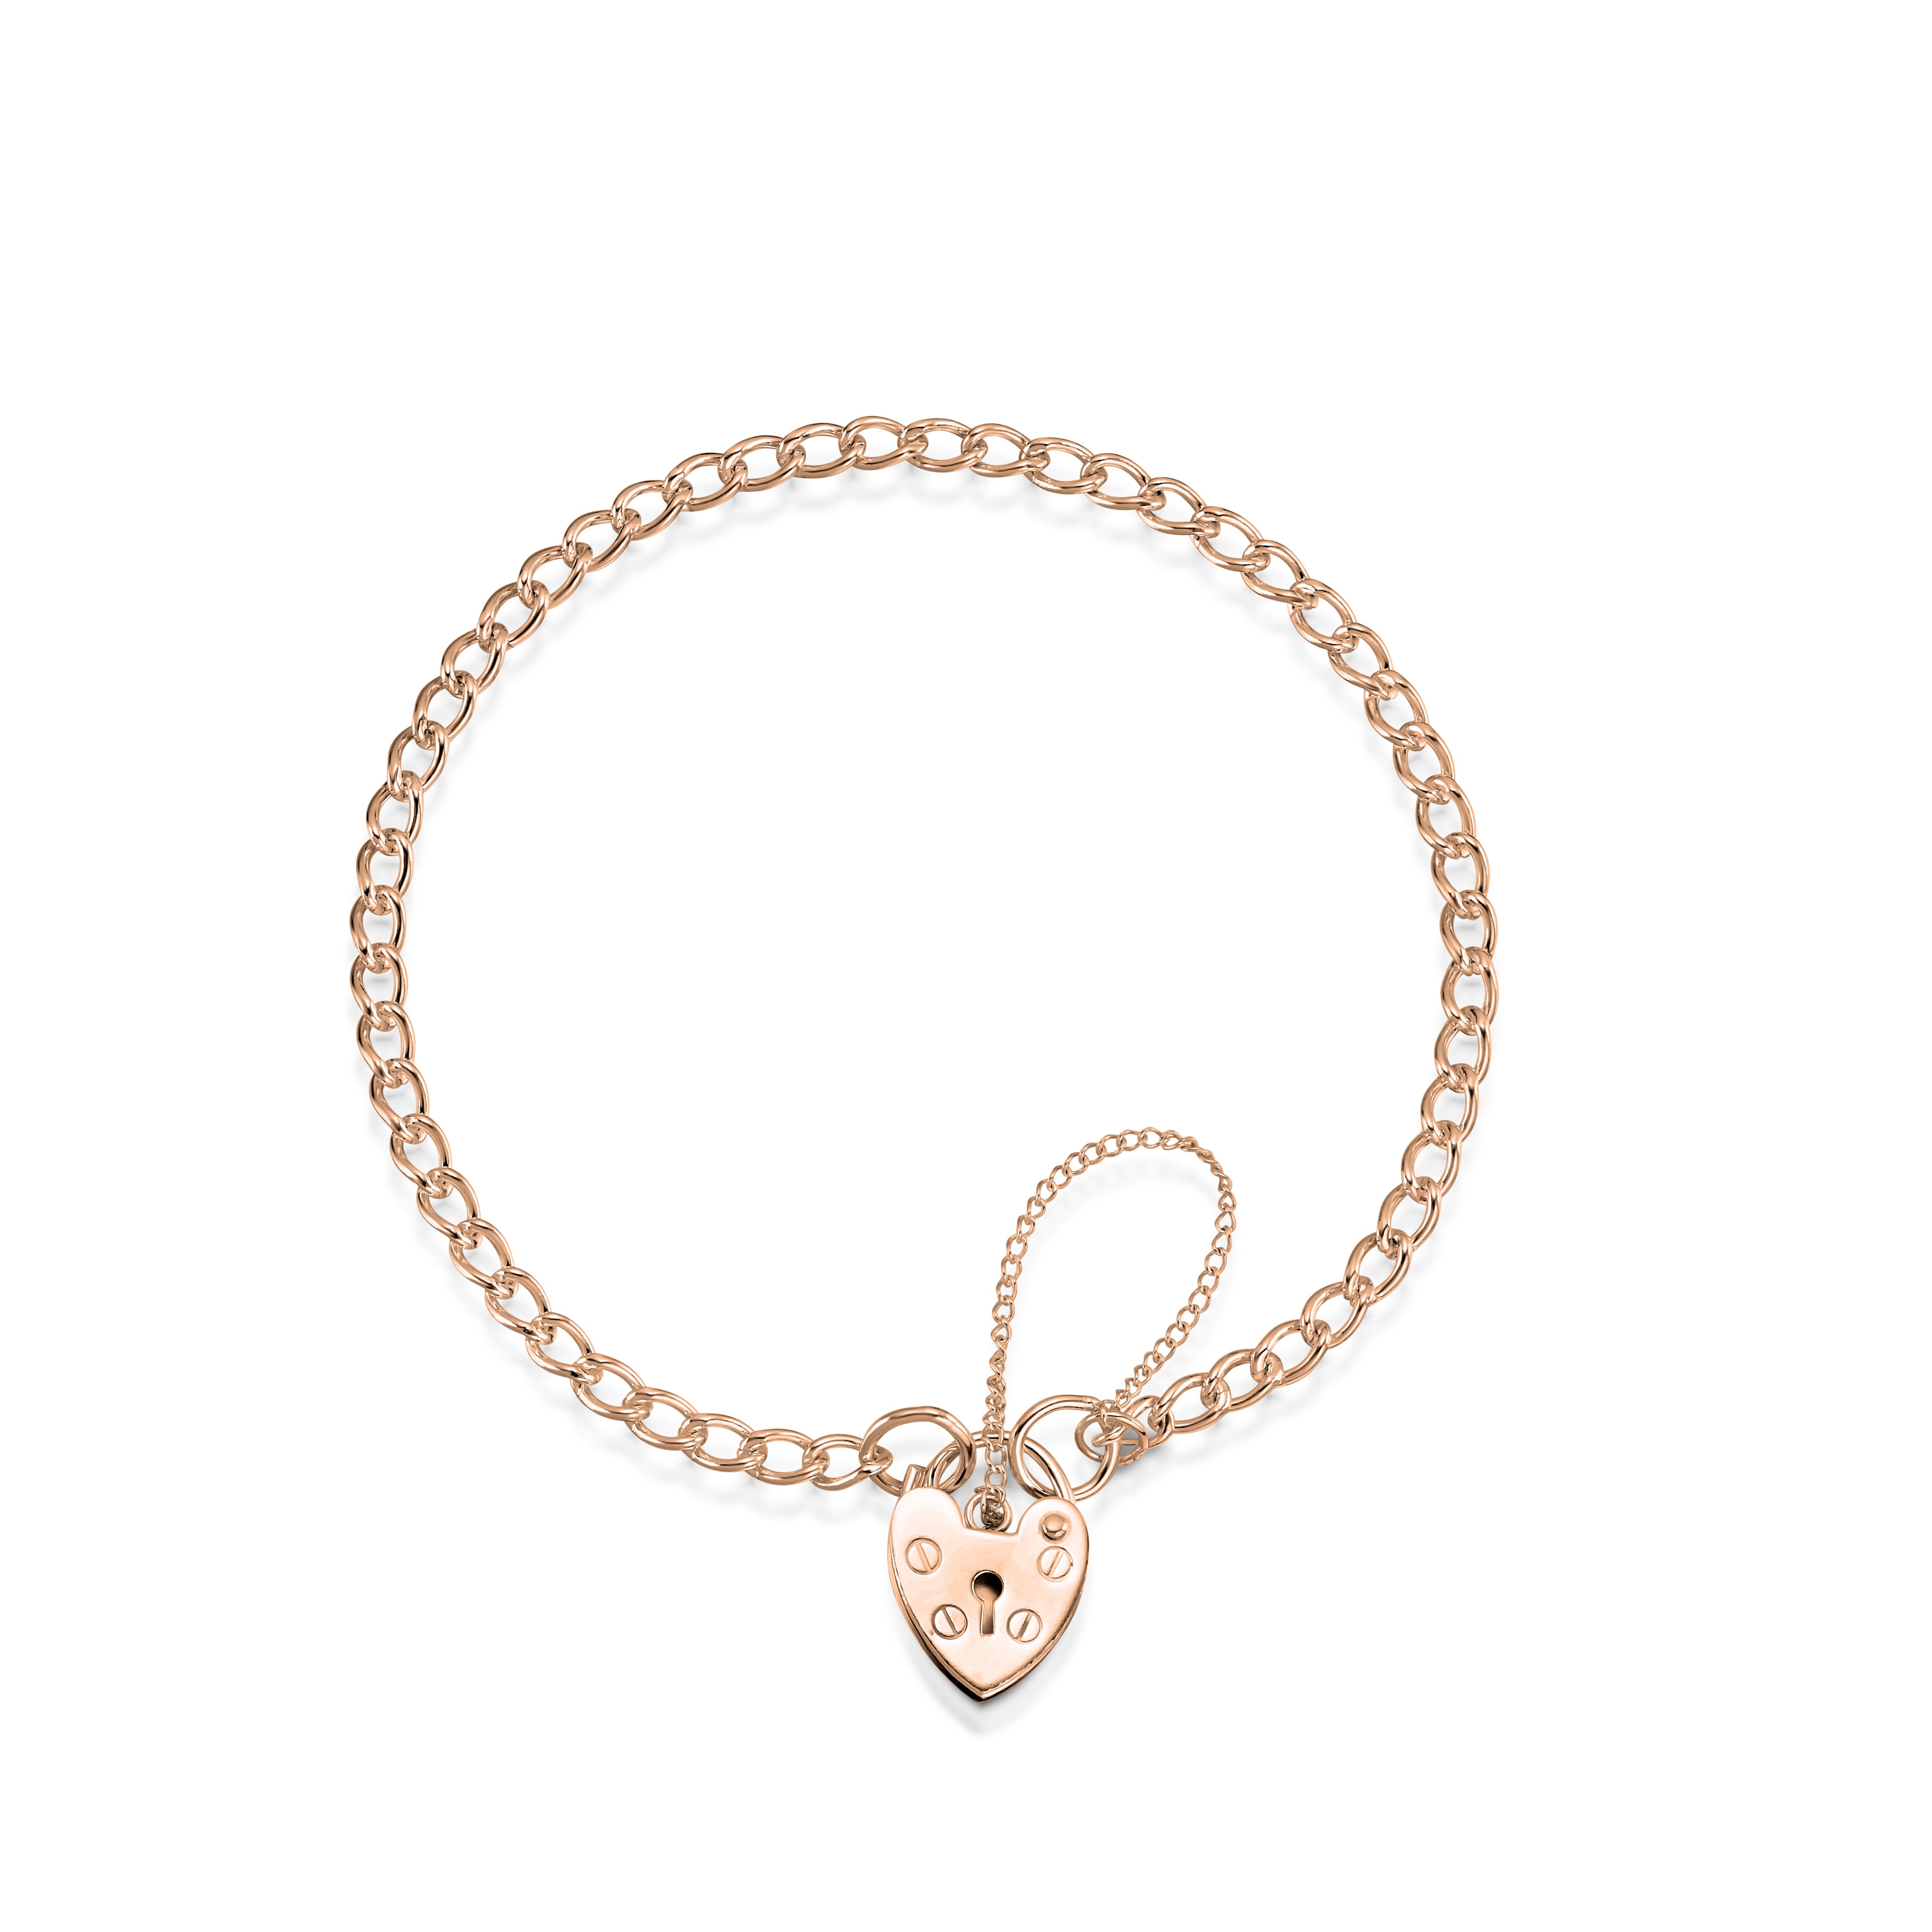 rose gold charm bracelet 9ct rose gold curb charm bracelet with heart shape padlock vundpmt